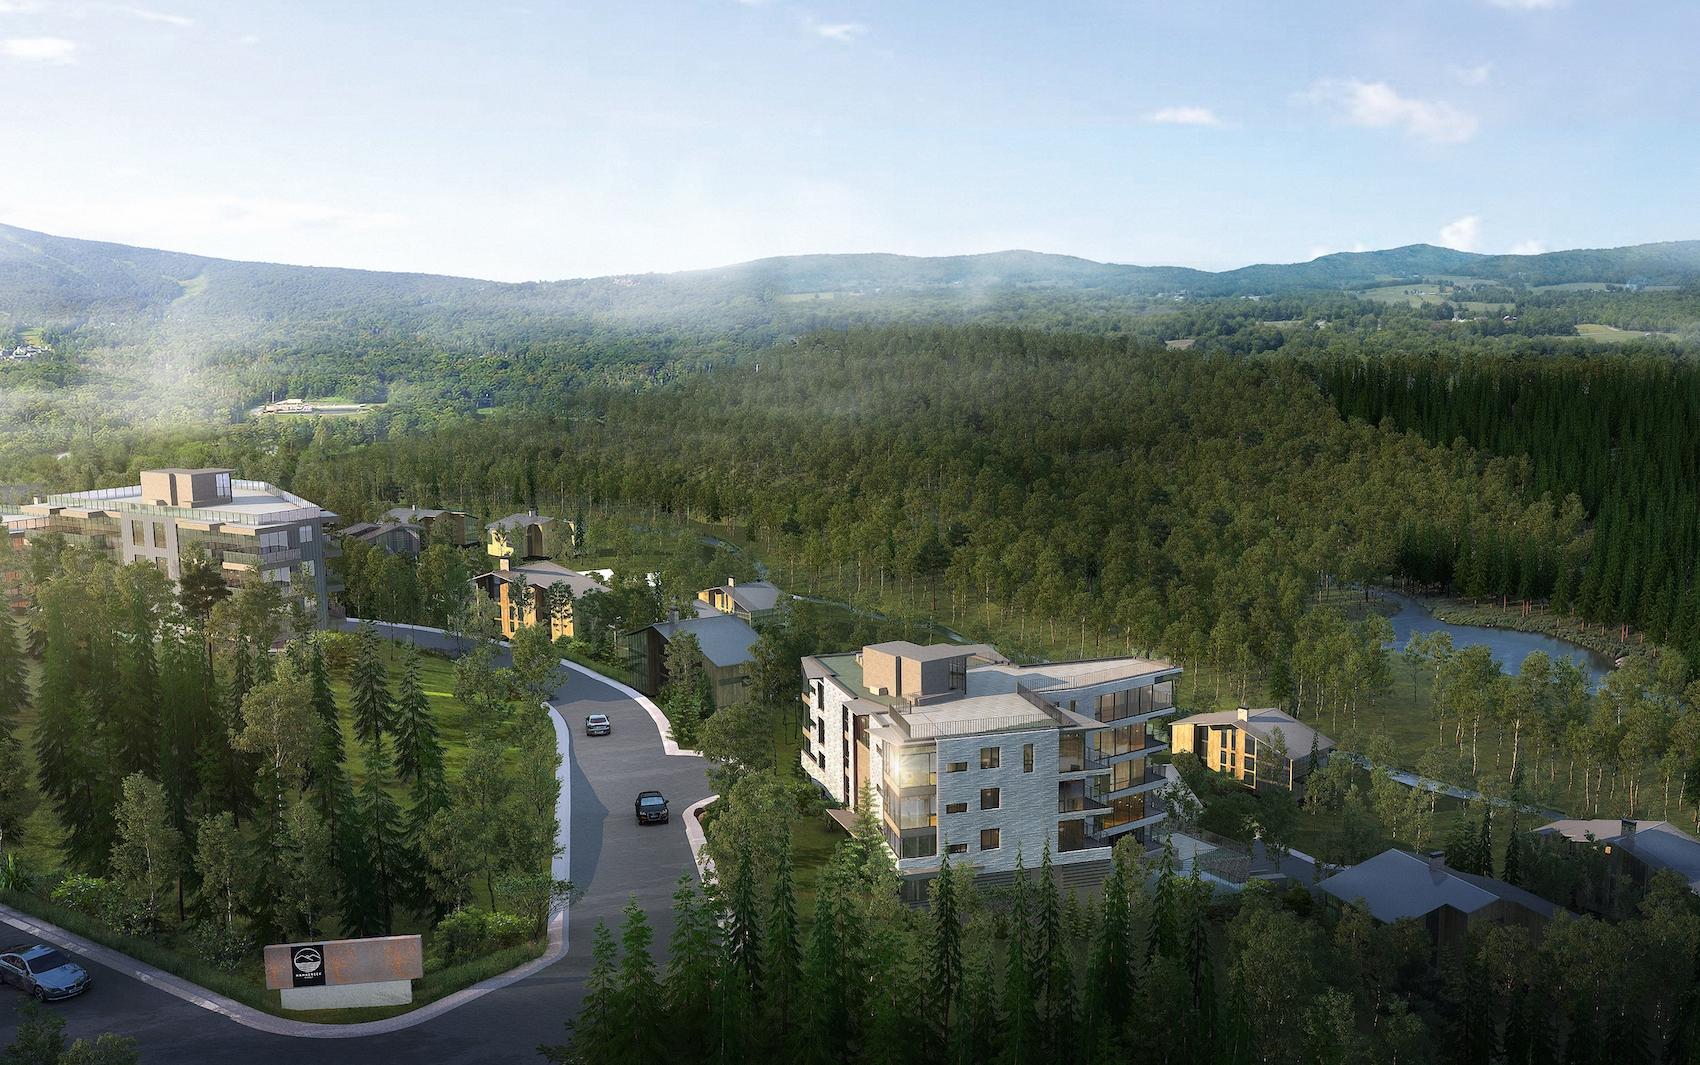 HJ Real Estate Guide: Hanacreek, Niseko's Newest Luxury Land Subdivision Concept